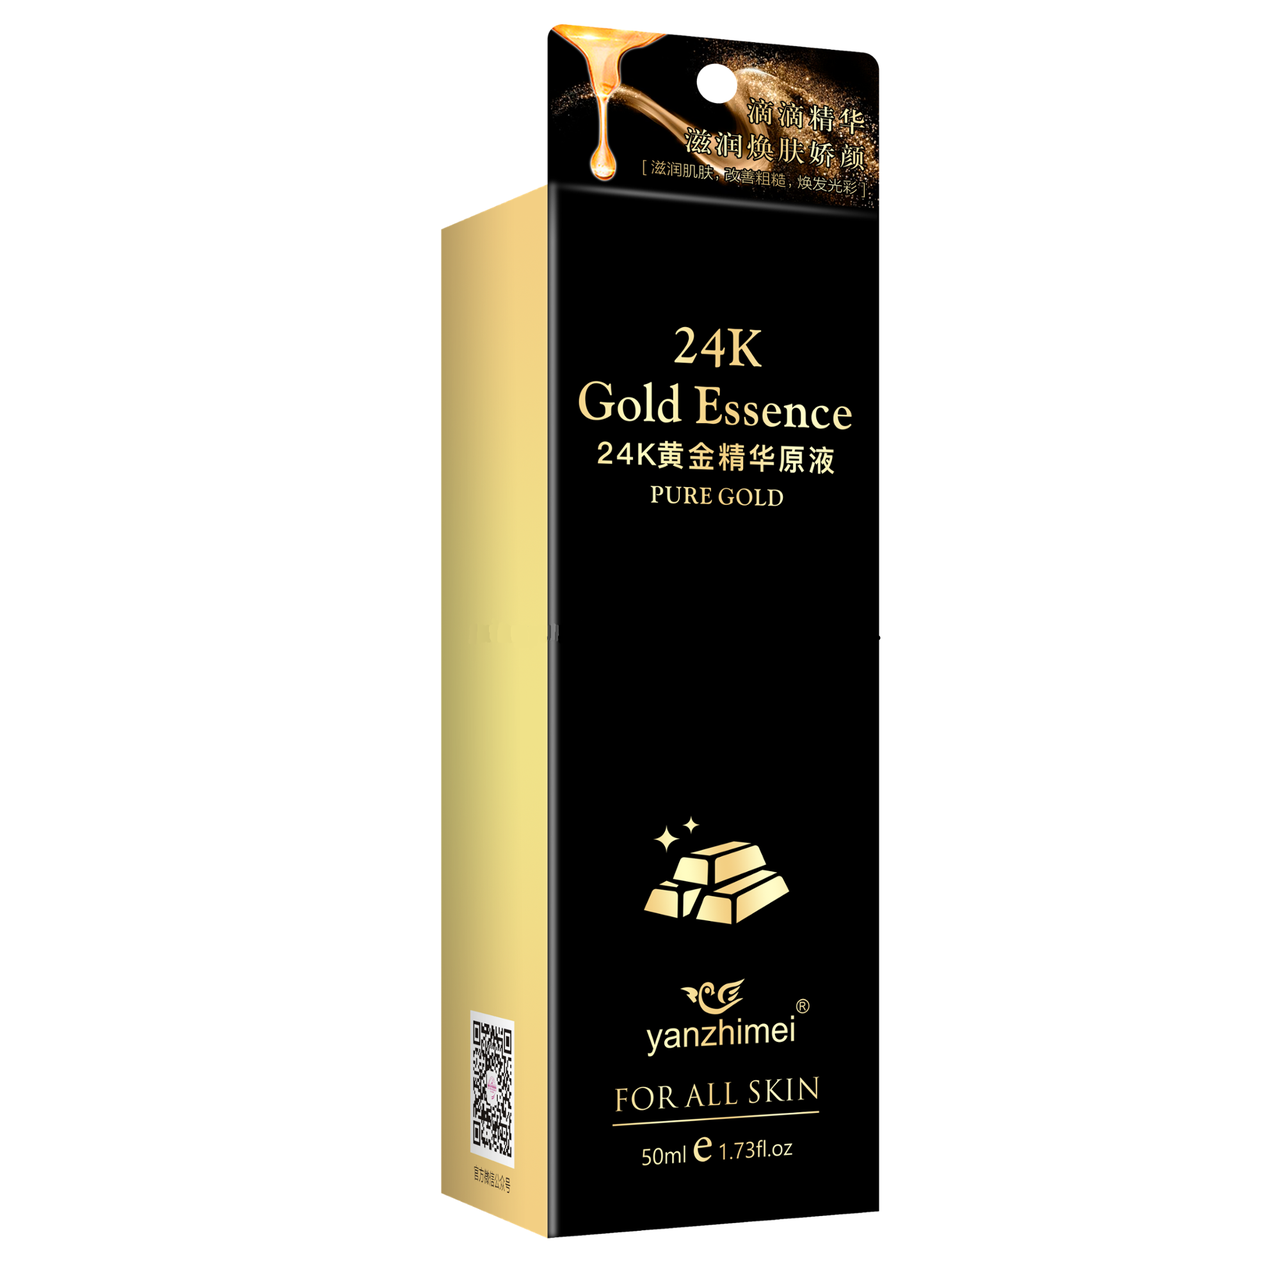 Gold Essence 24K